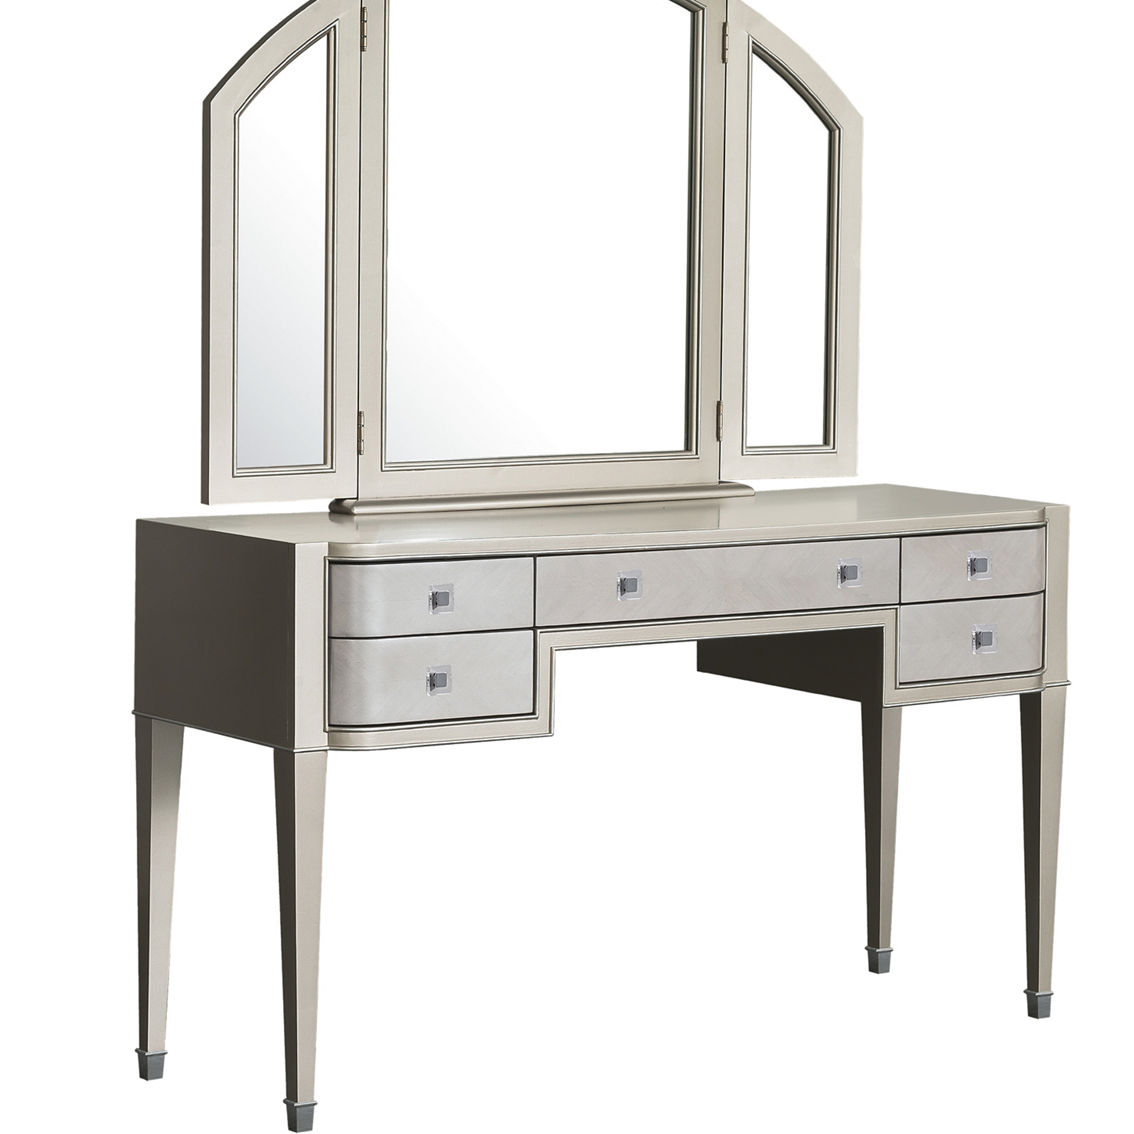 Pulaski Furniture Zoey Five Drawer Vanity Dressing Table - Image 2 of 4